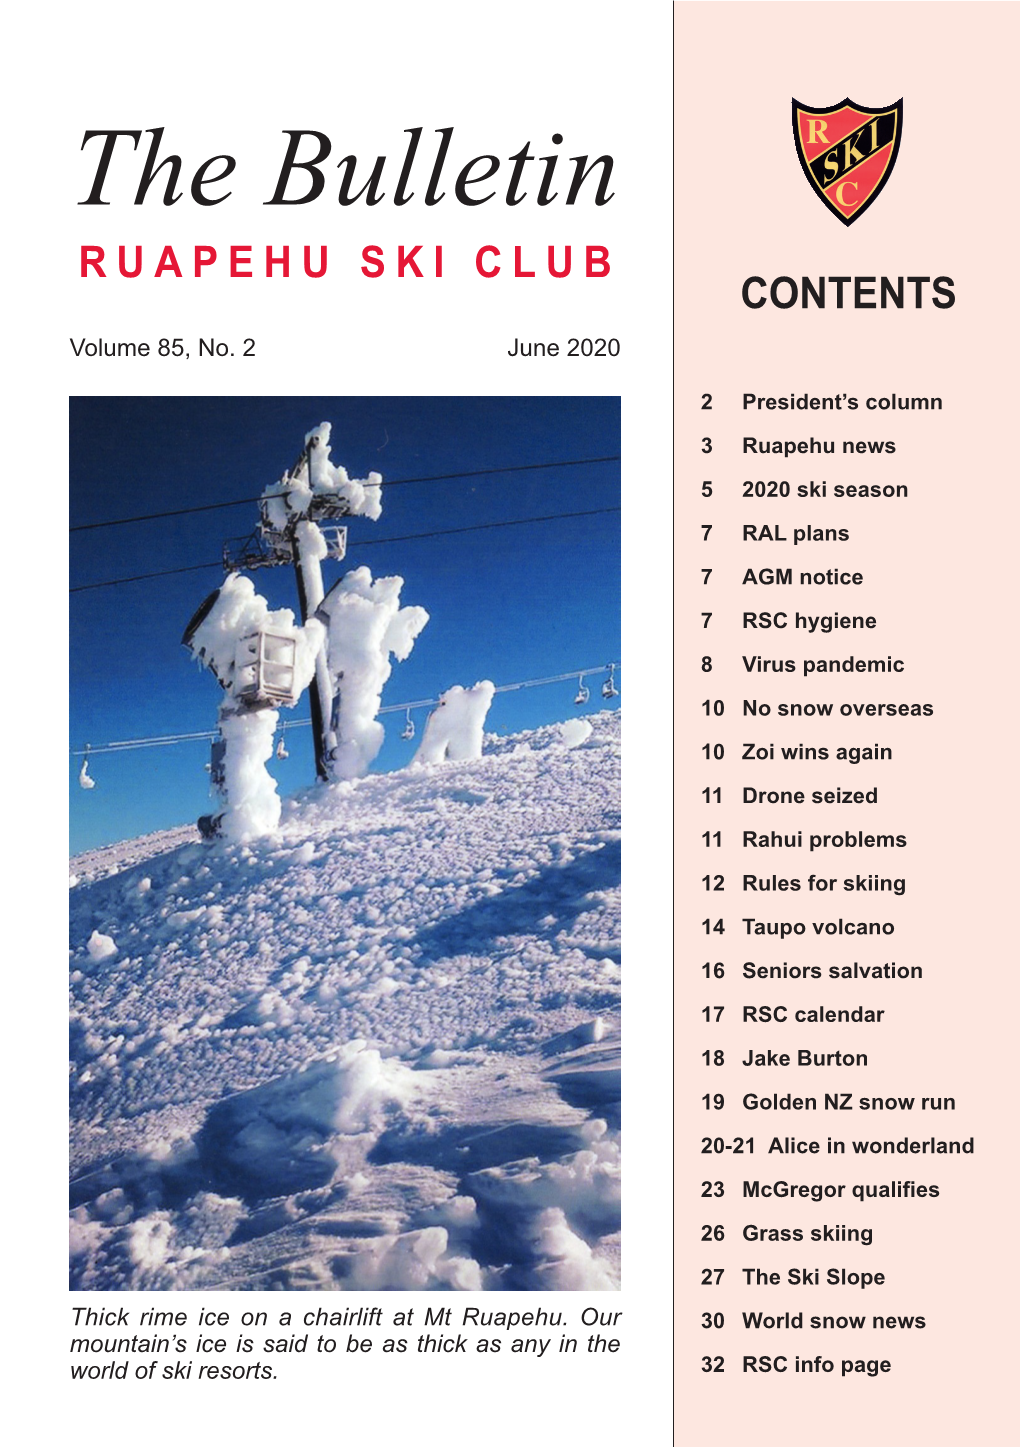 The Bulletin, June 2020 1 the Bulletin RUAPEHU SKI CLUB CONTENTS Volume 85, No